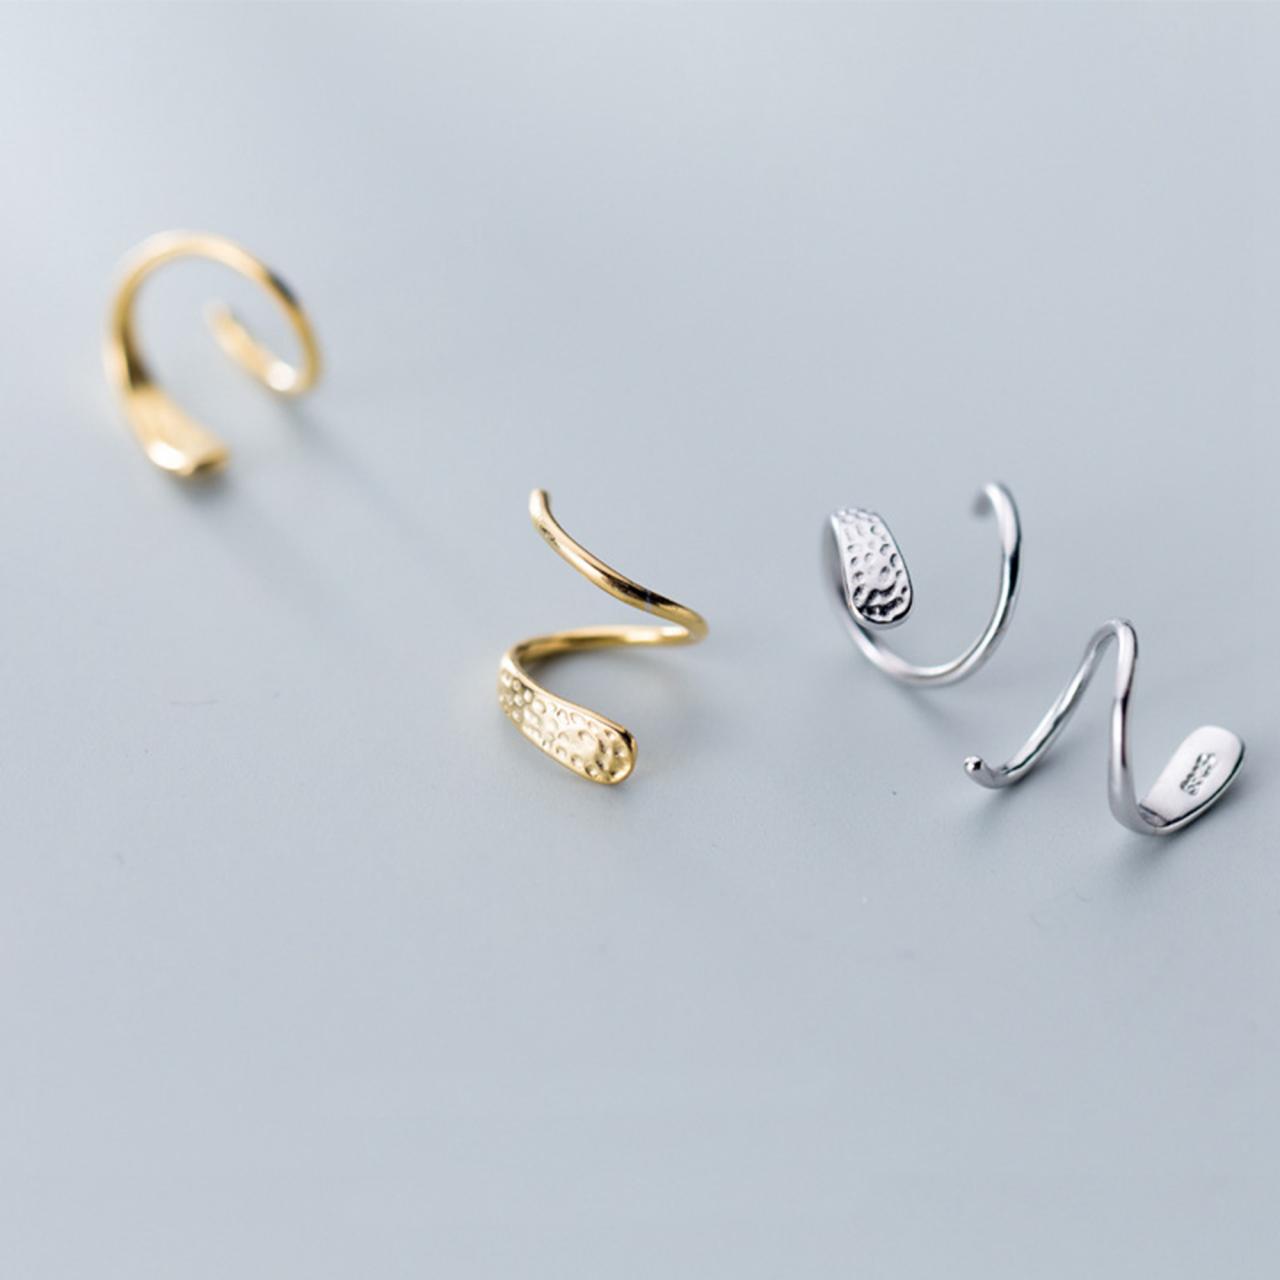 Sterling Silver Spiral Ear Studs, Spiral Post Earrings, Women Earrings, Everyday Earrings, Ear Post, Wave Earrings